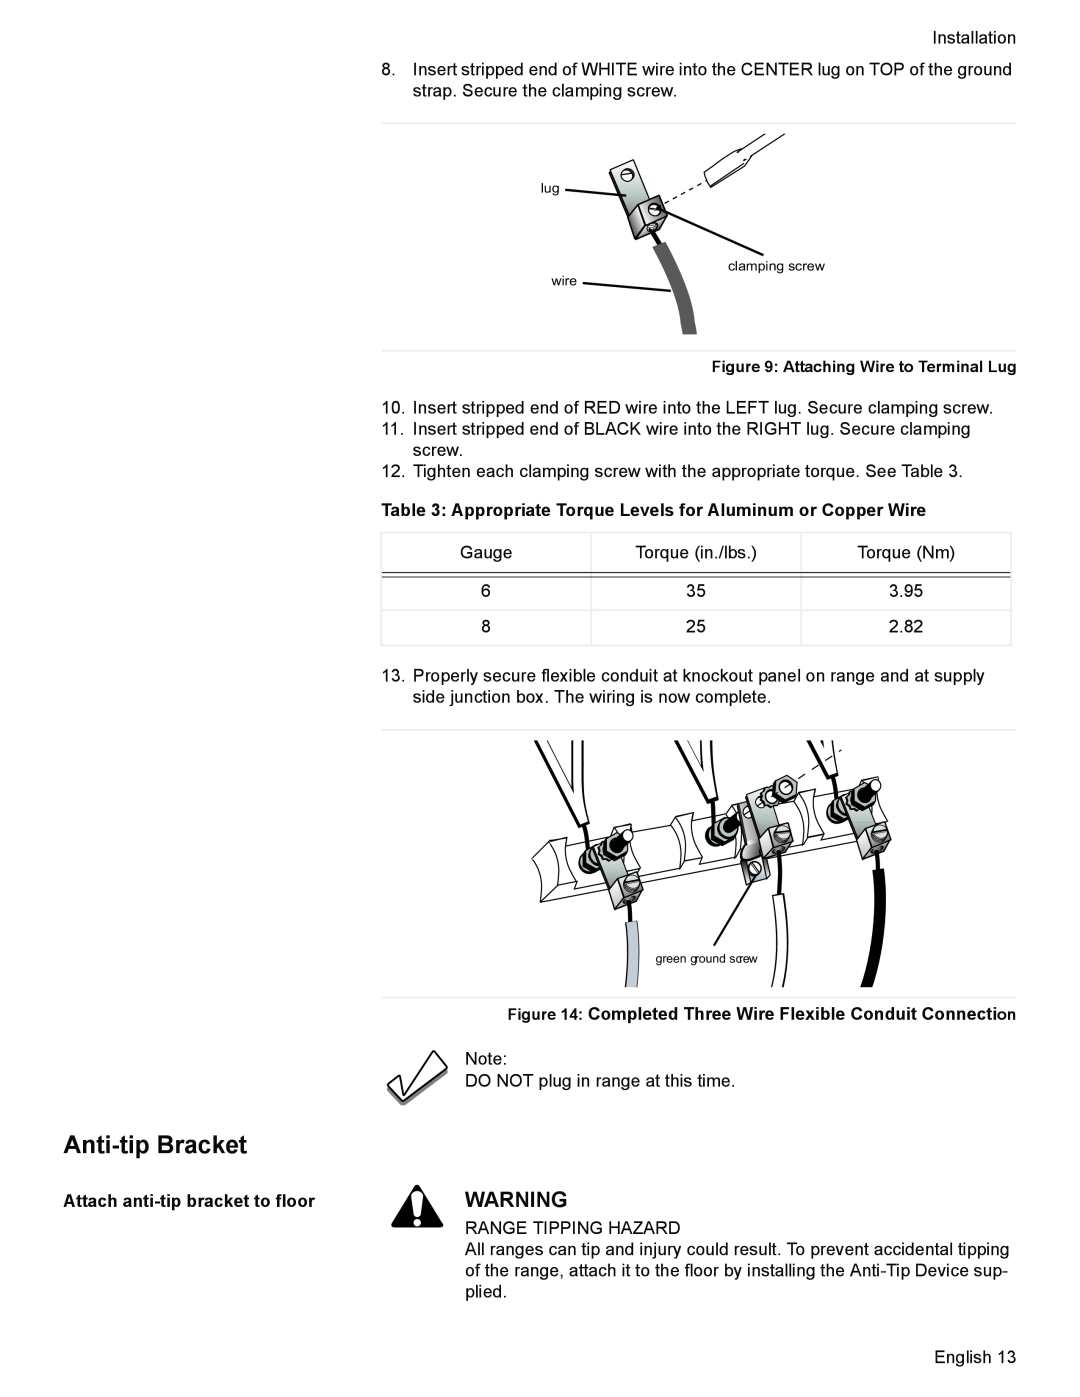 Siemens C) Anti-tip Bracket, Appropriate Torque Levels for Aluminum or Copper Wire, Attach anti-tip bracket to floor 